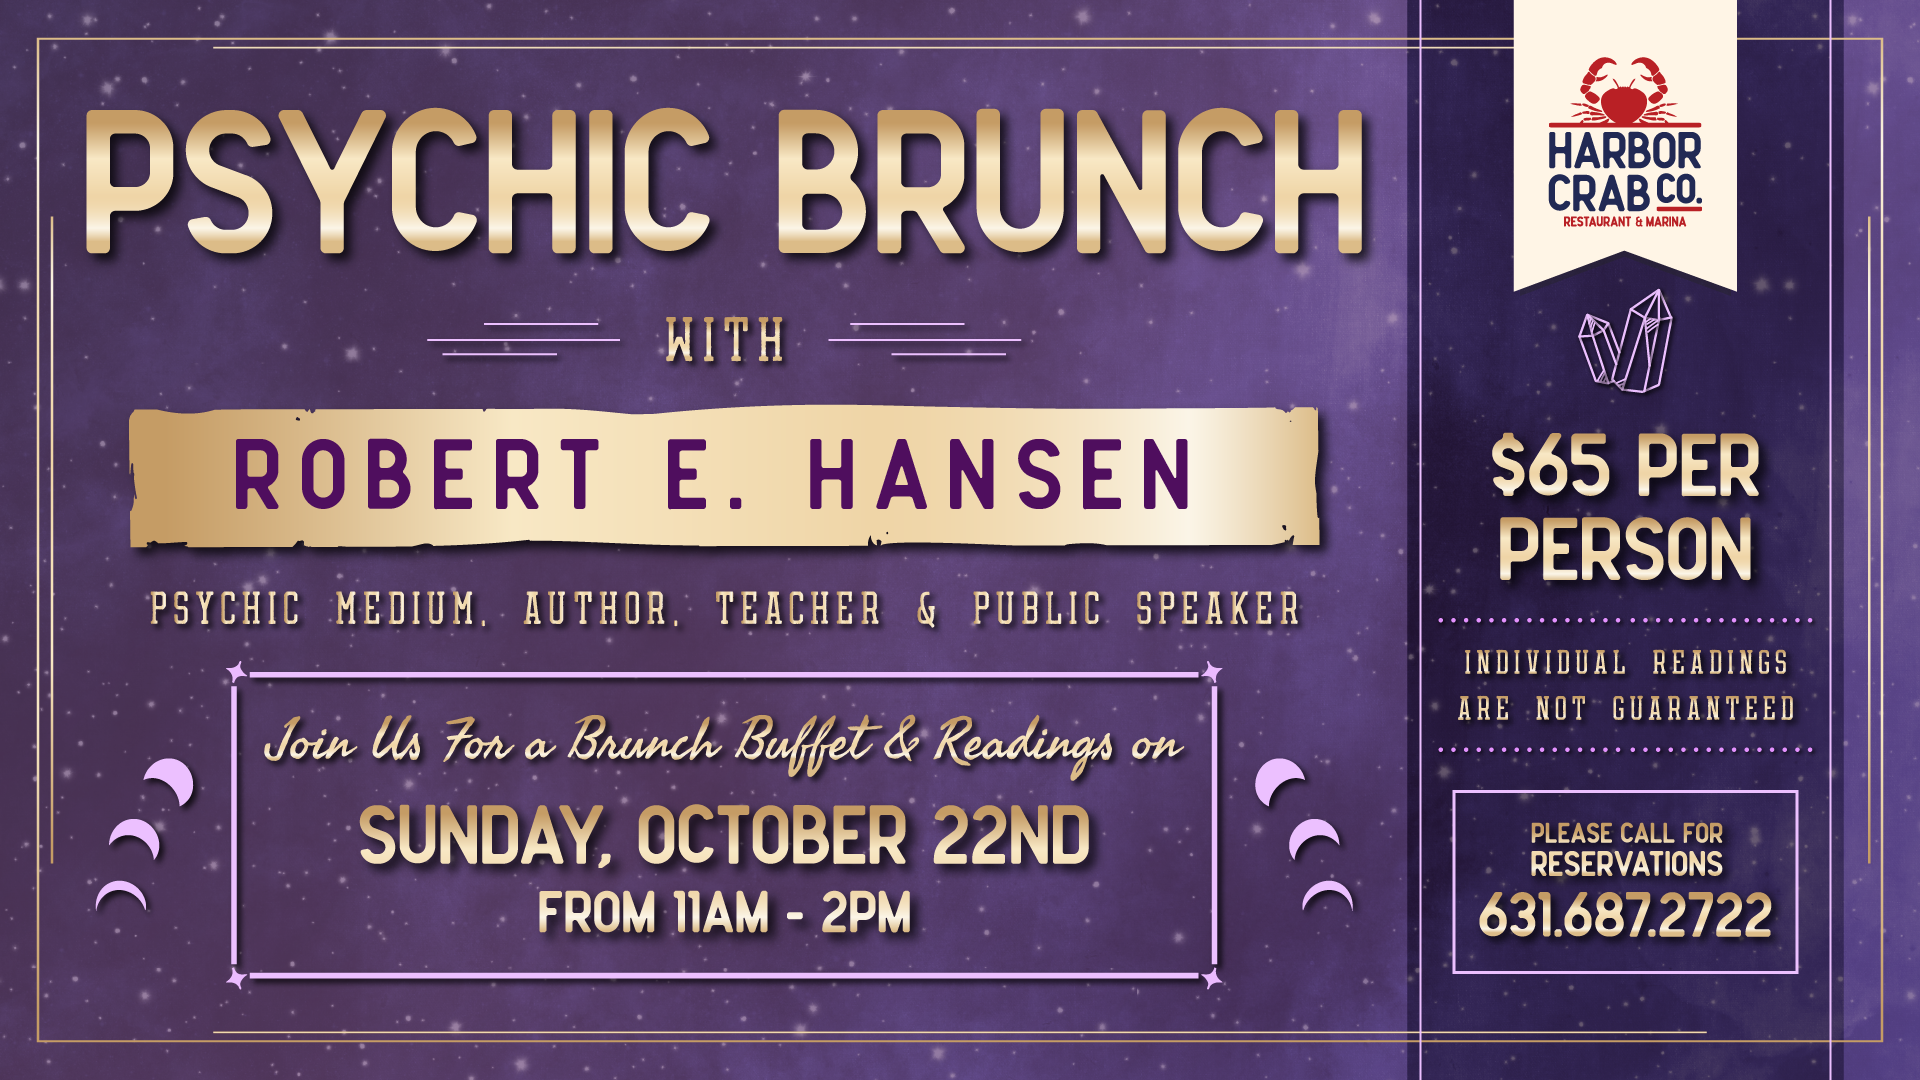 Psychic Brunch with Robert E. Hansen on Sunday, October 22nd.